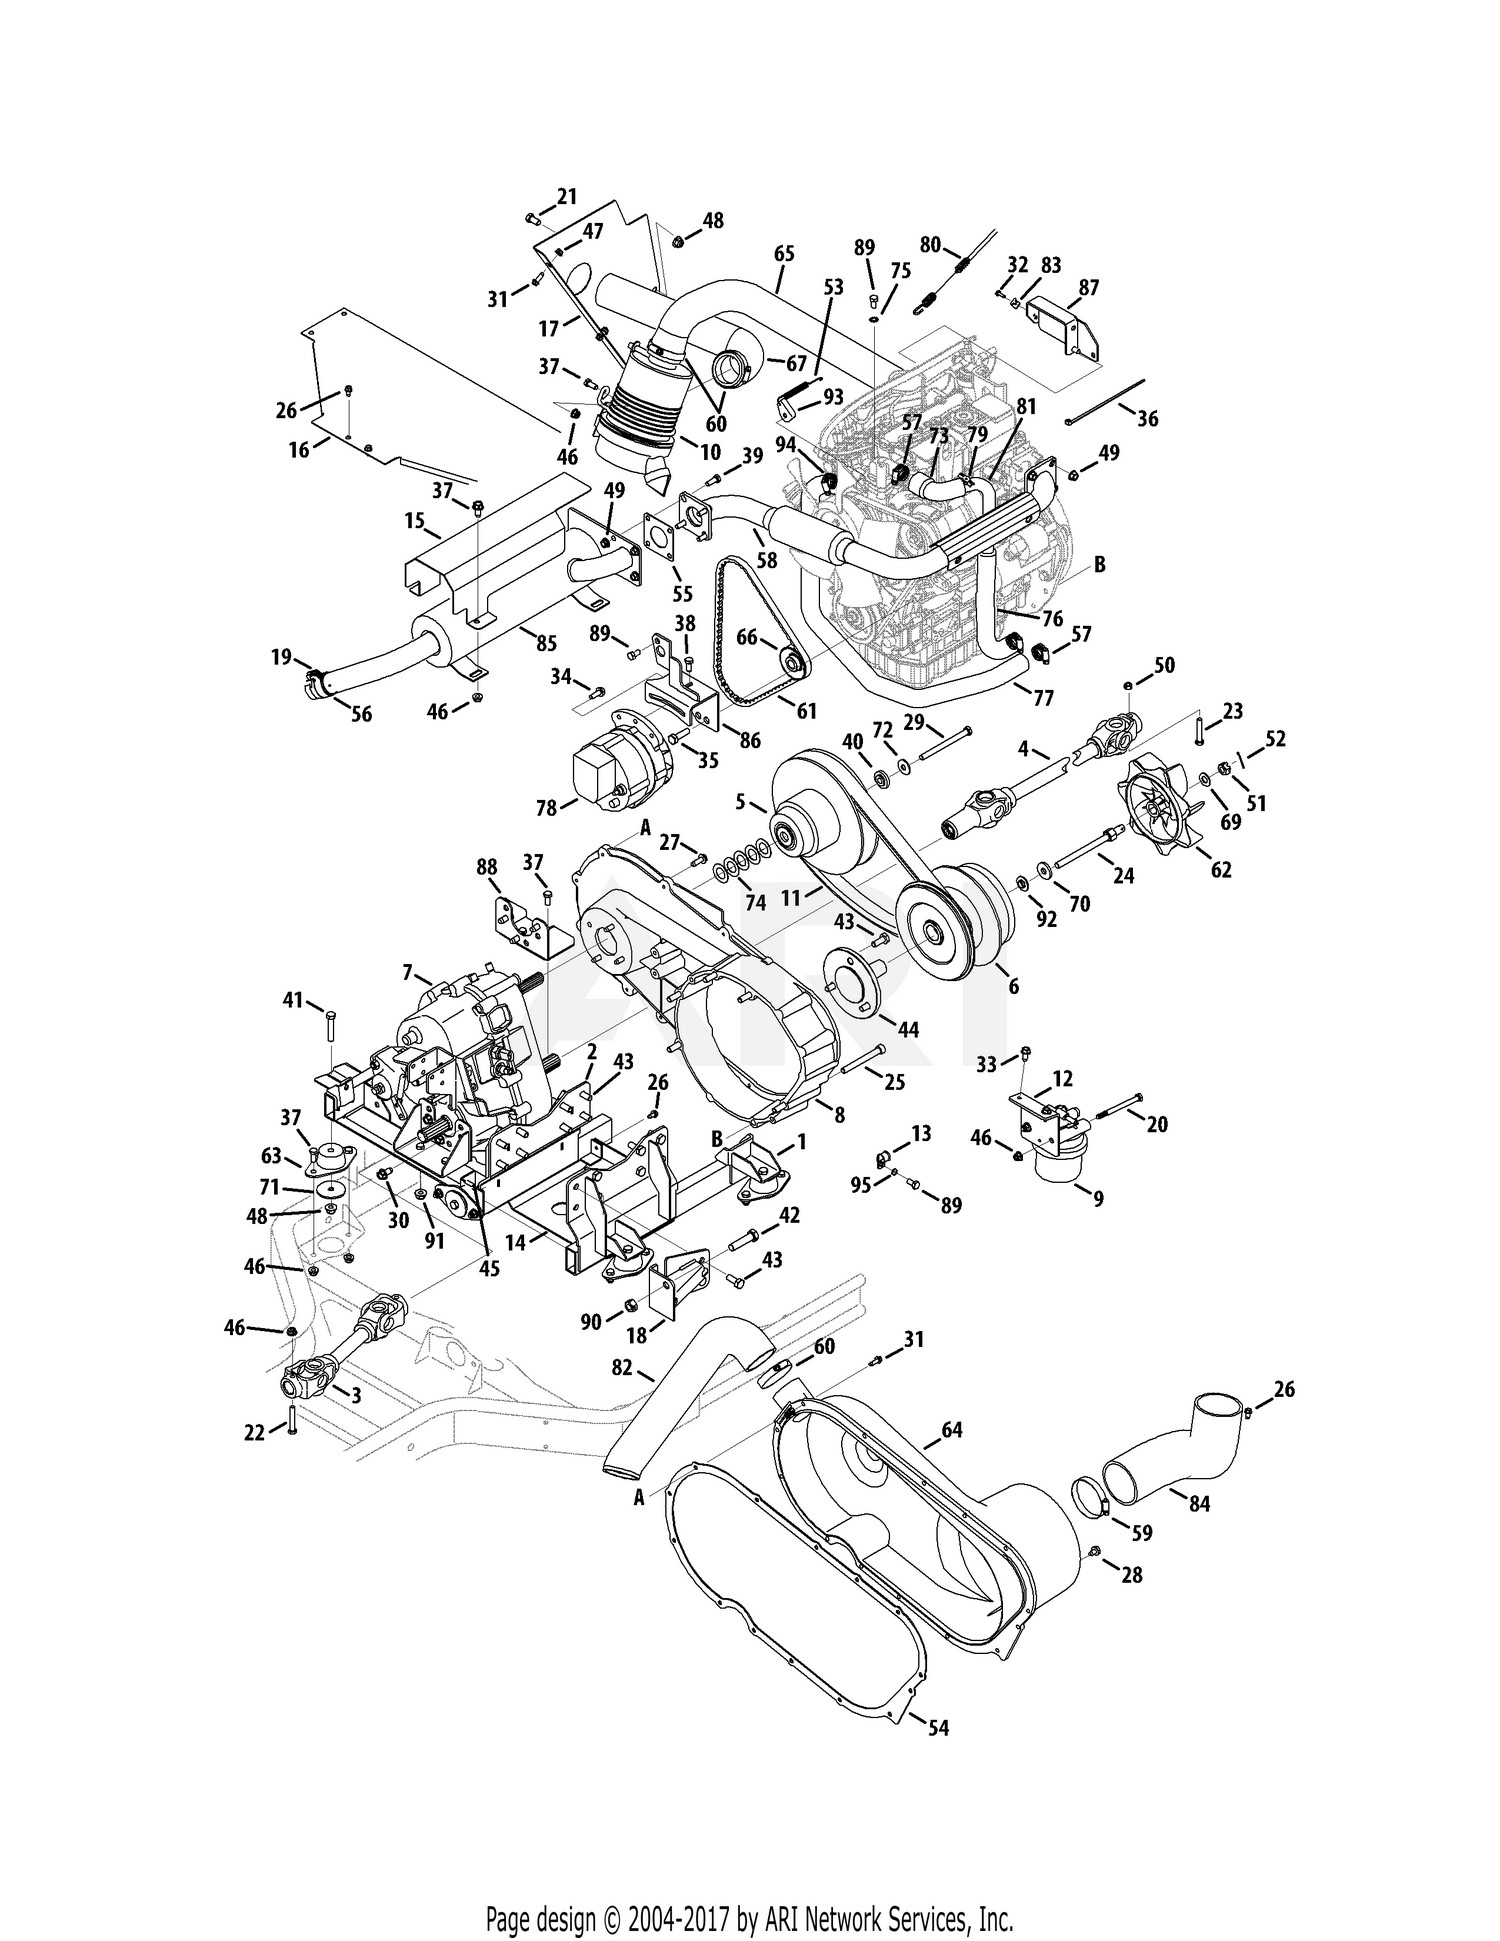 Yanmar Engine Parts Diagram Cub Cadet Parts Diagrams Cub Cadet 466 Diesel 4×4 Utility Vehicle S Of Yanmar Engine Parts Diagram